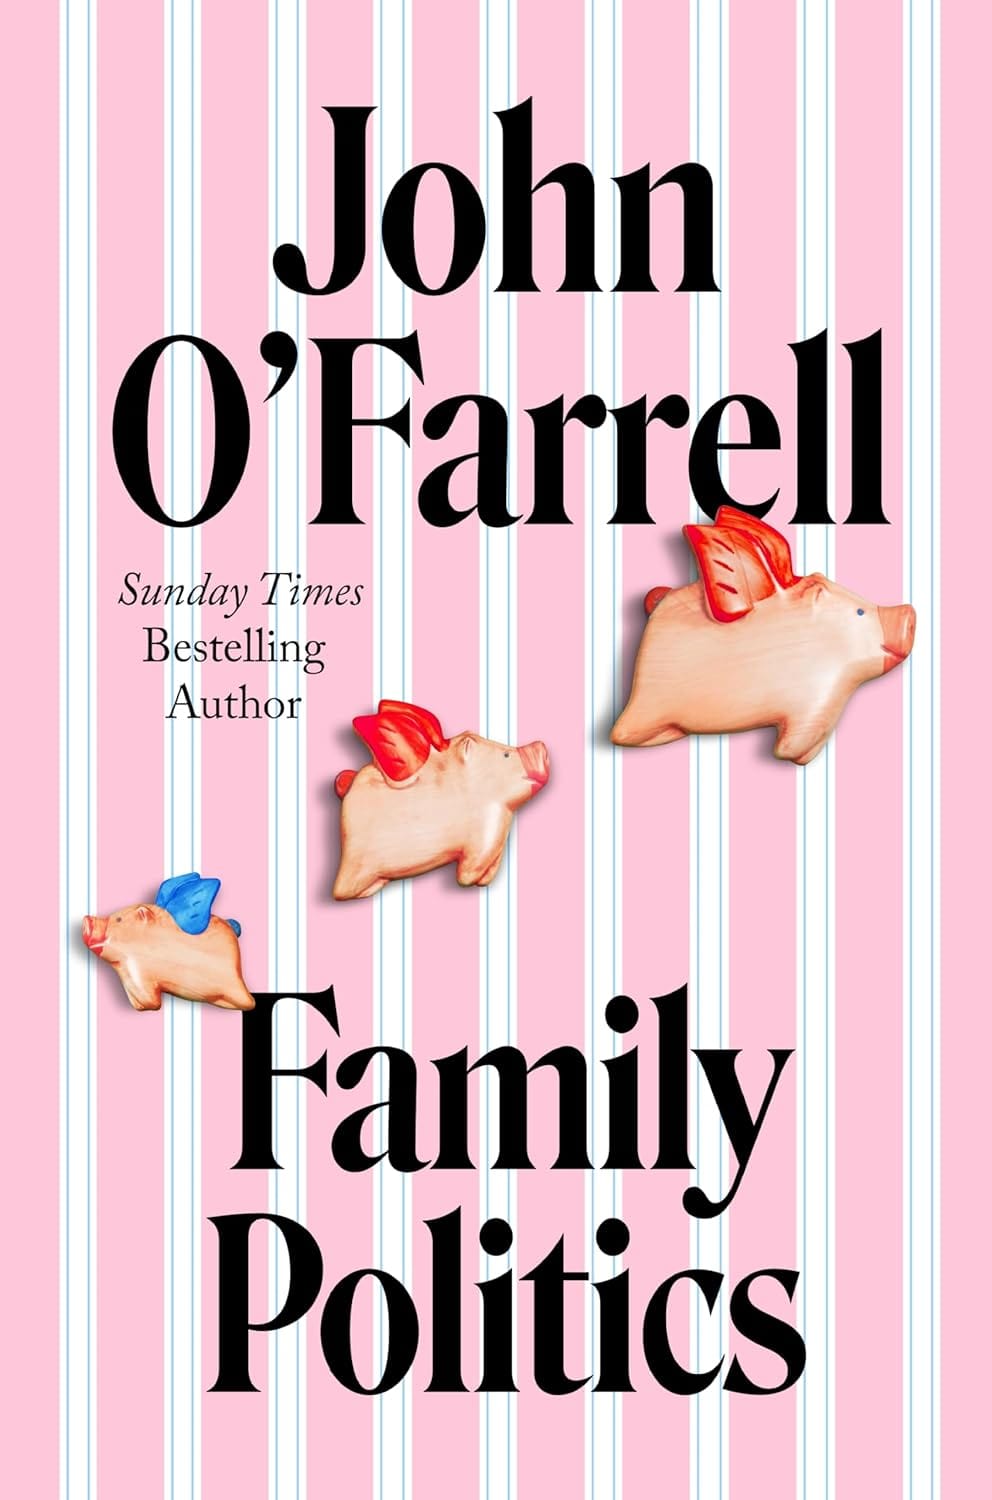 Family Politics: John O'Farrell Hardcover